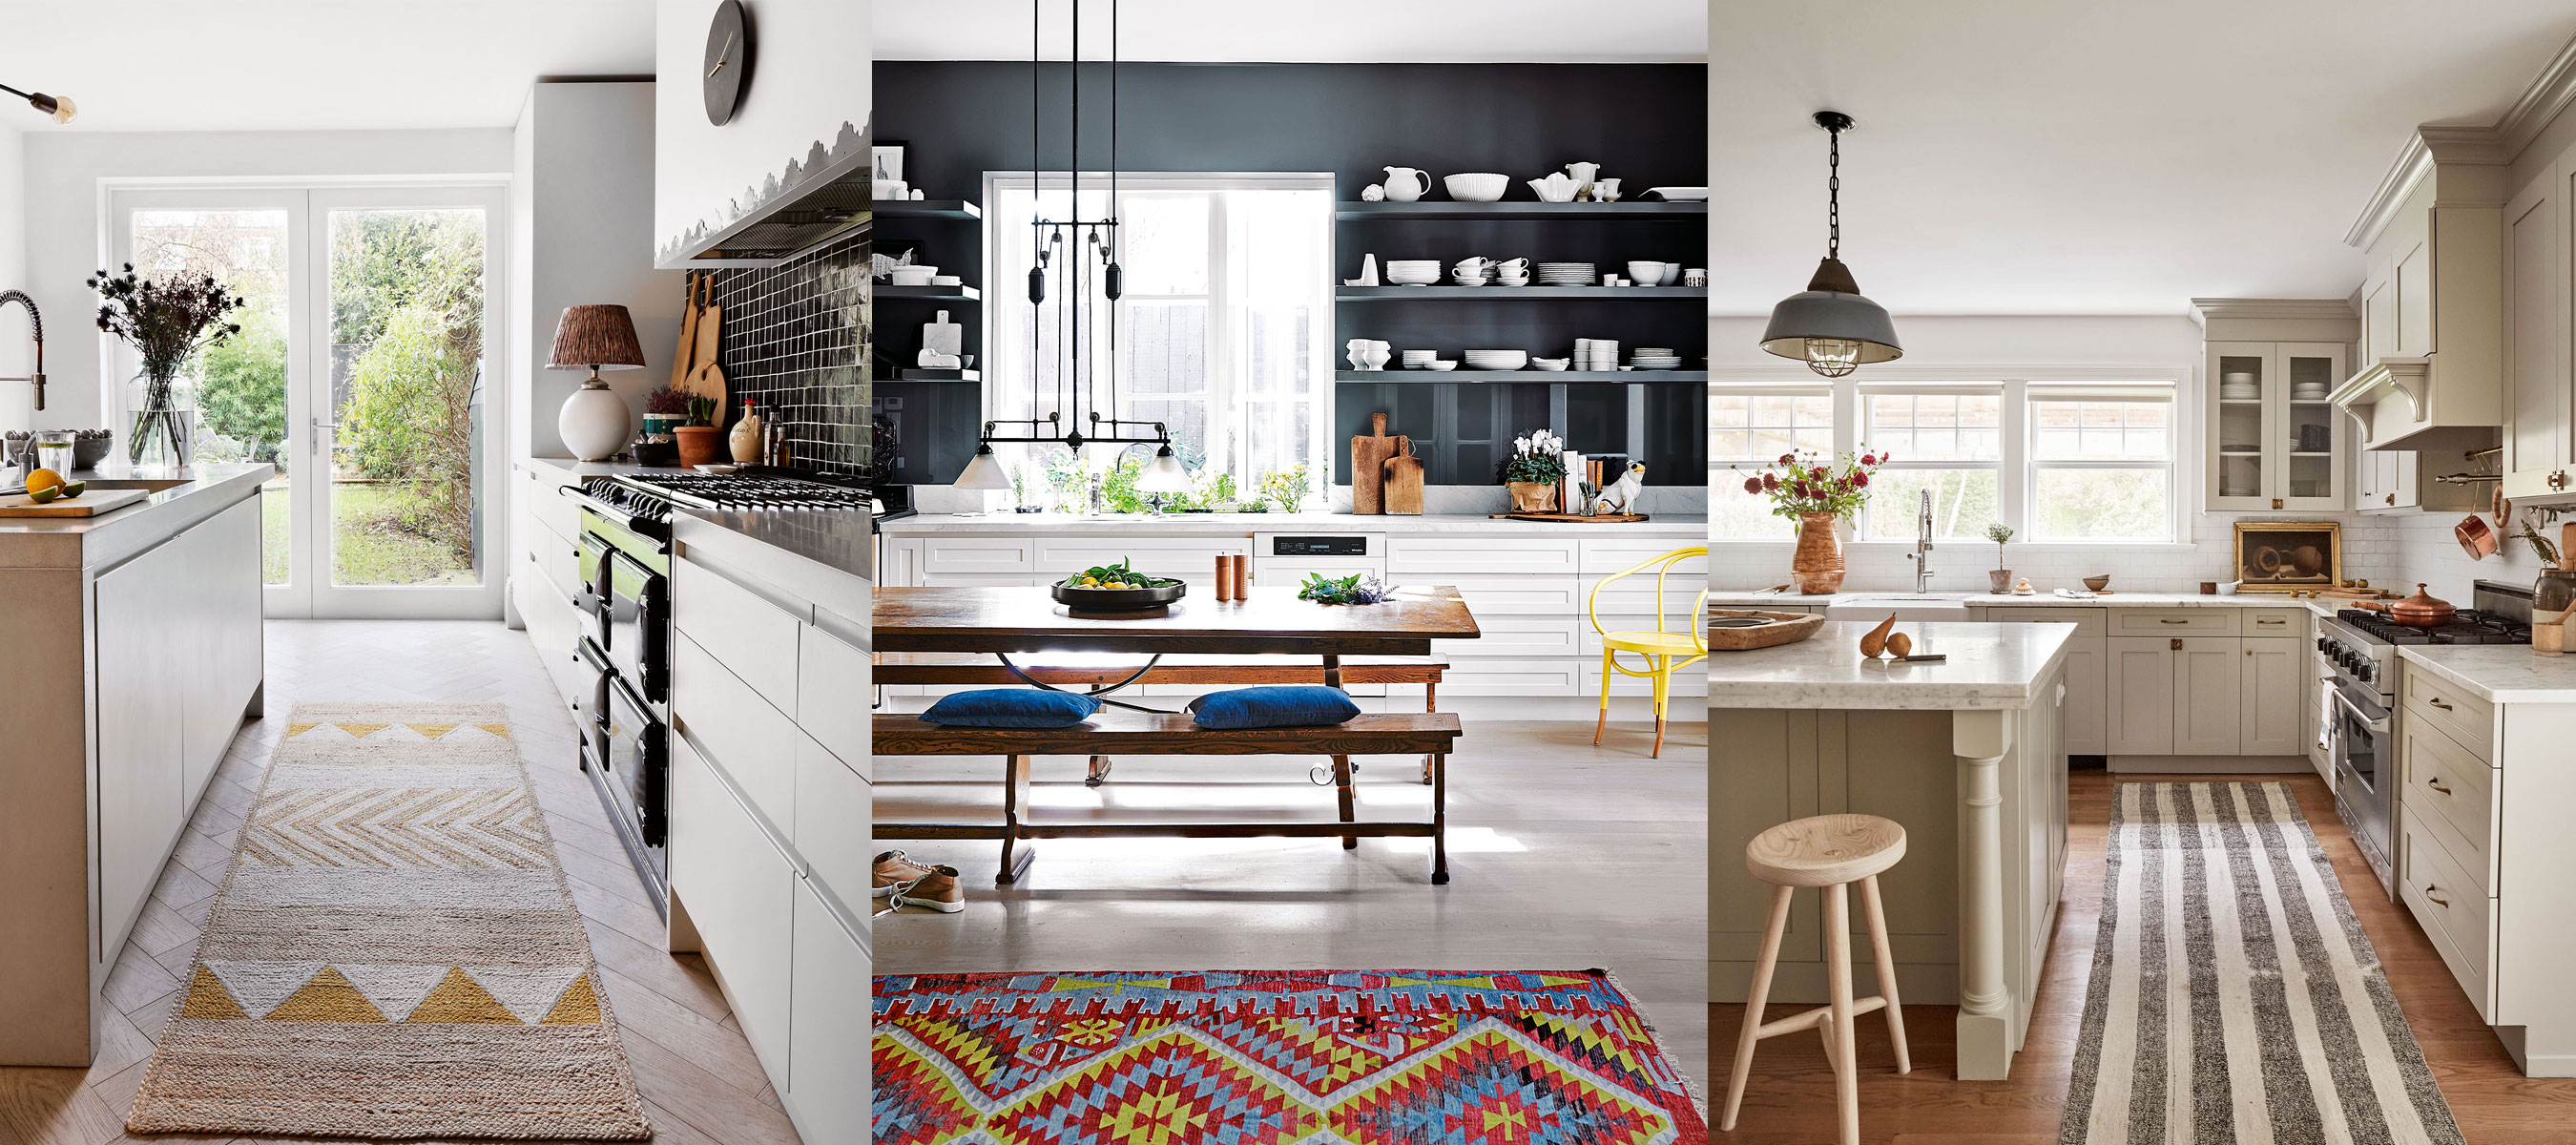 Kitchen rug ideas 18 best rug designs for kitchens   Homes ...